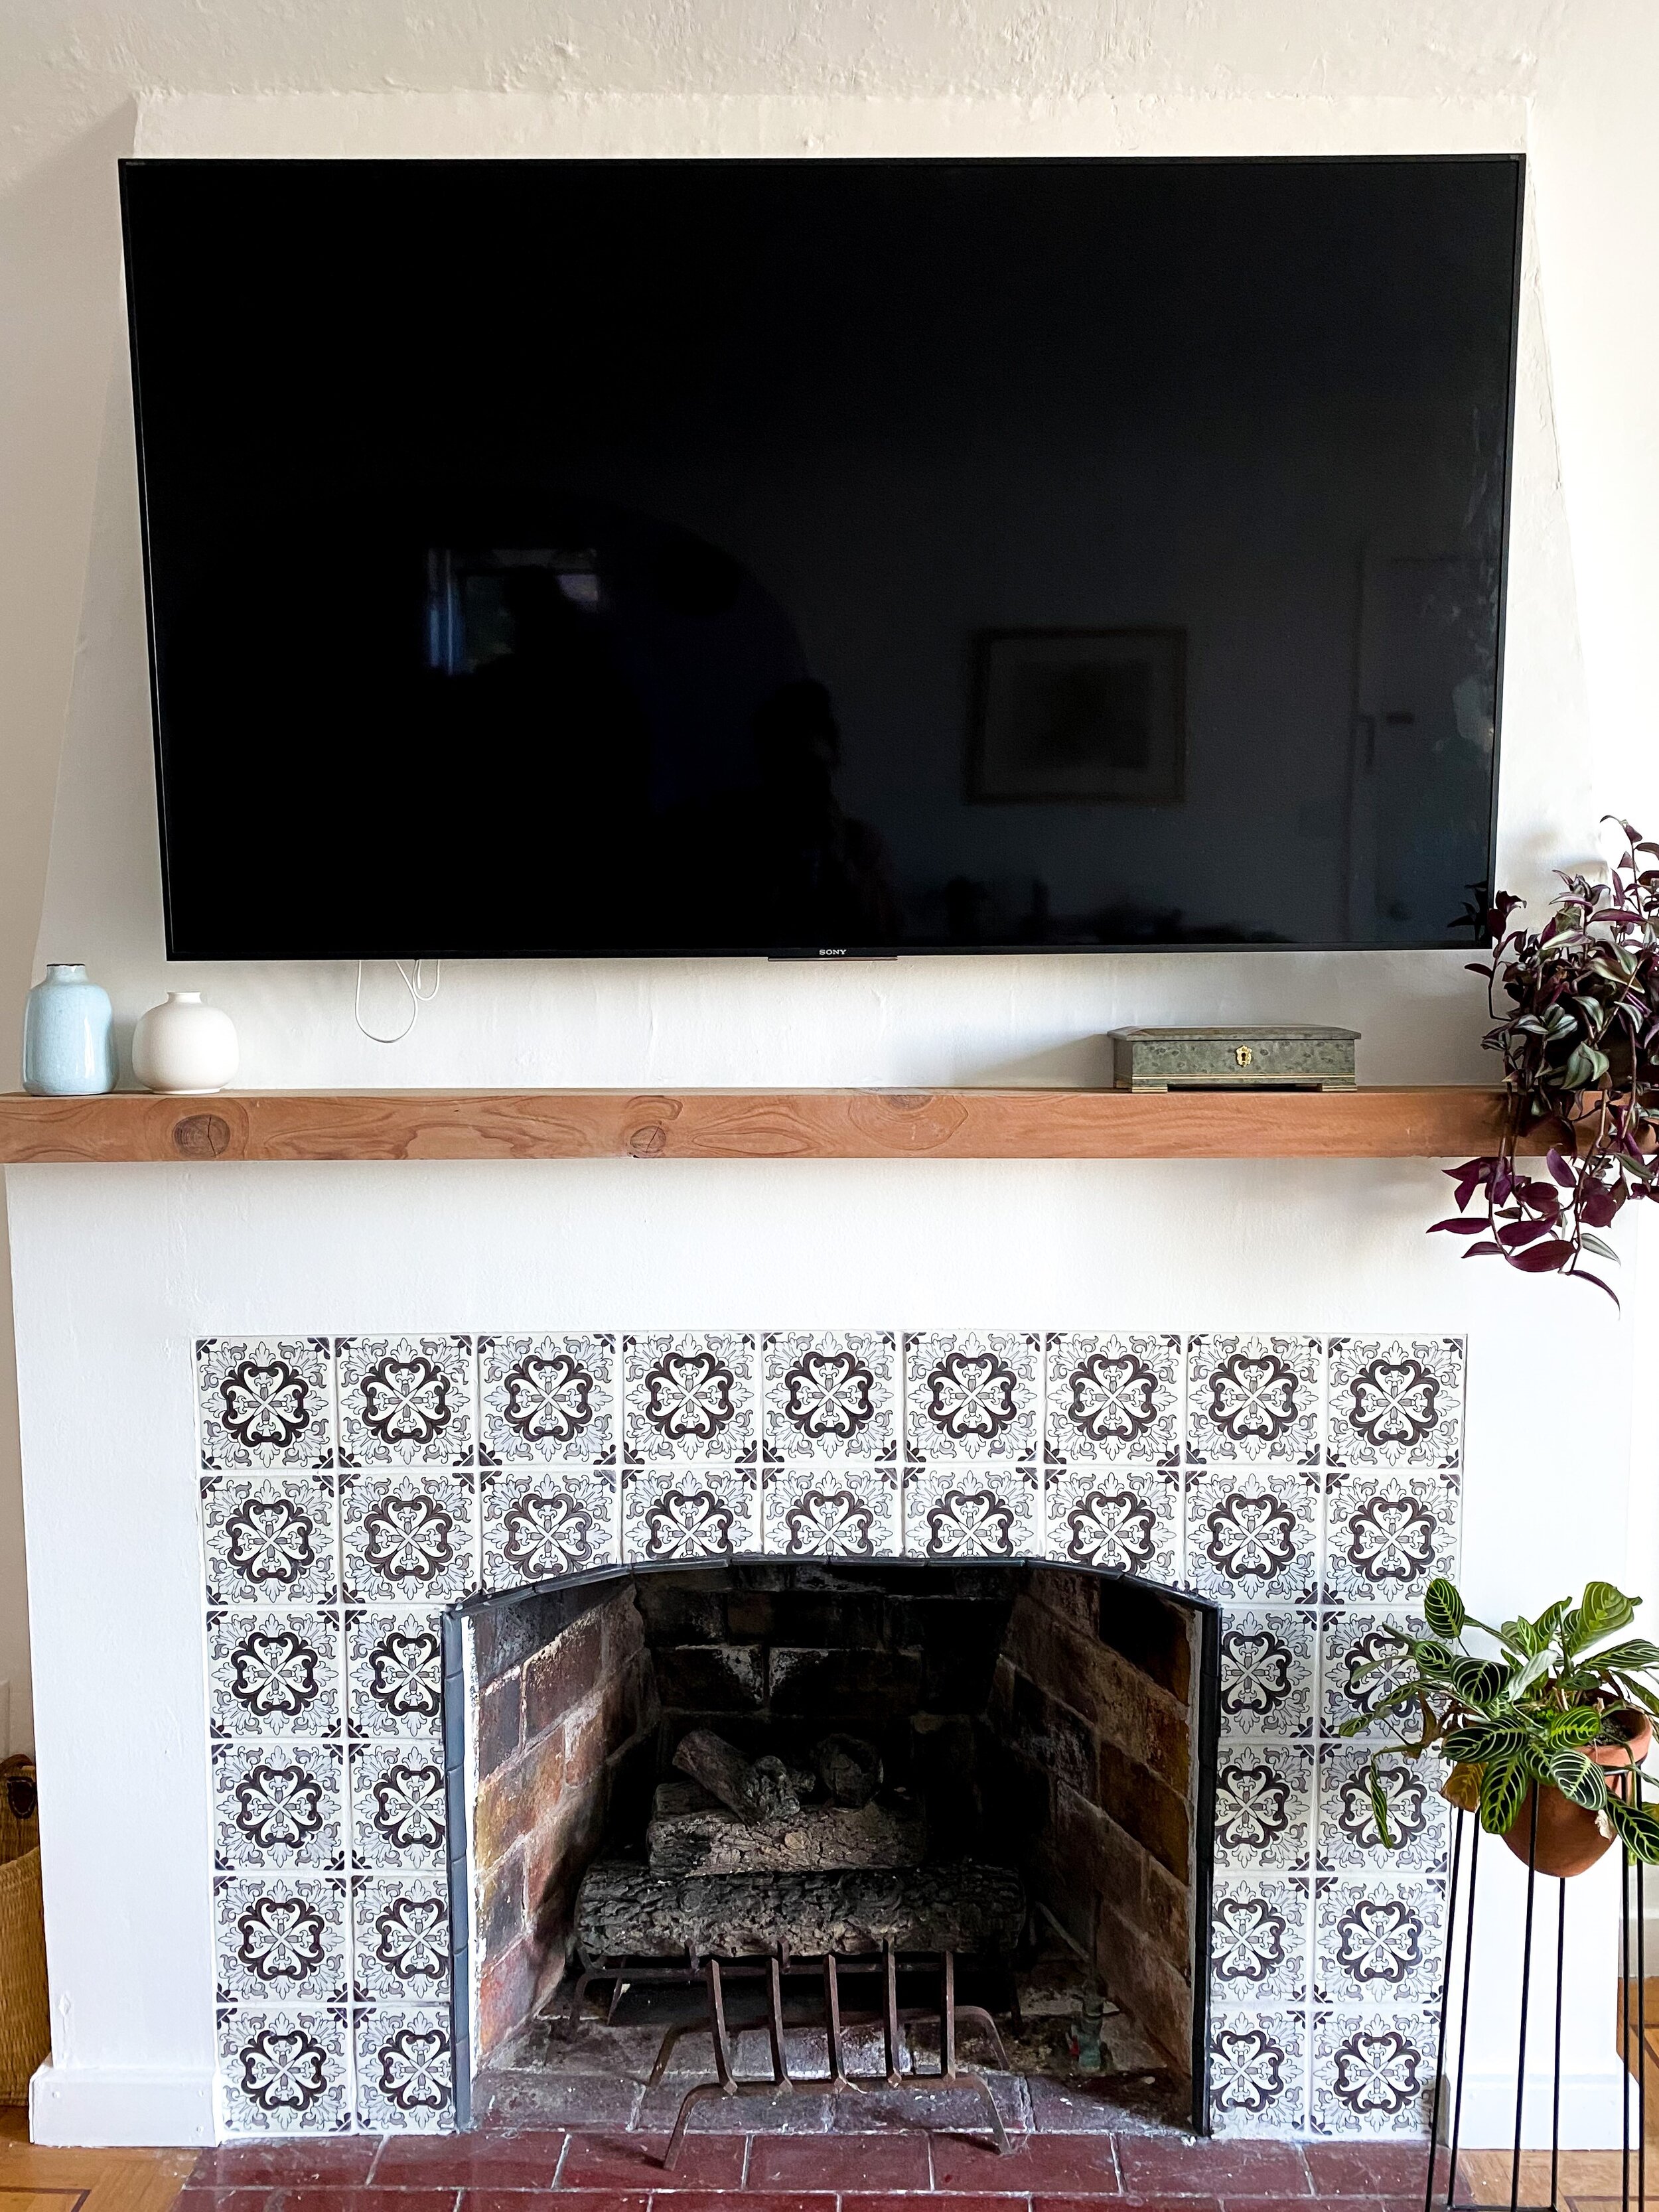 The Fireplace Renovation Spanish, Spanish Tile Fireplace Designs